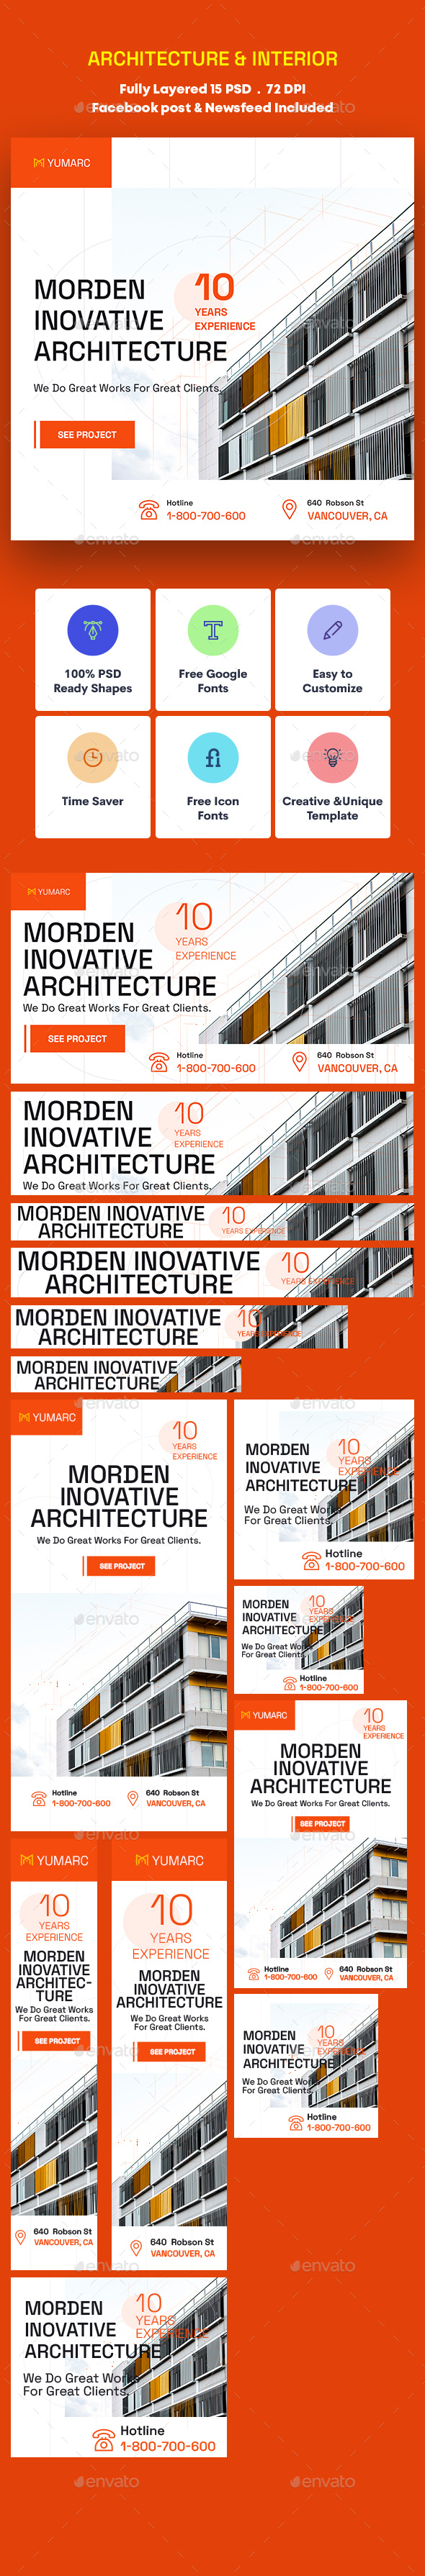 Architecture & Interior Banners Ad